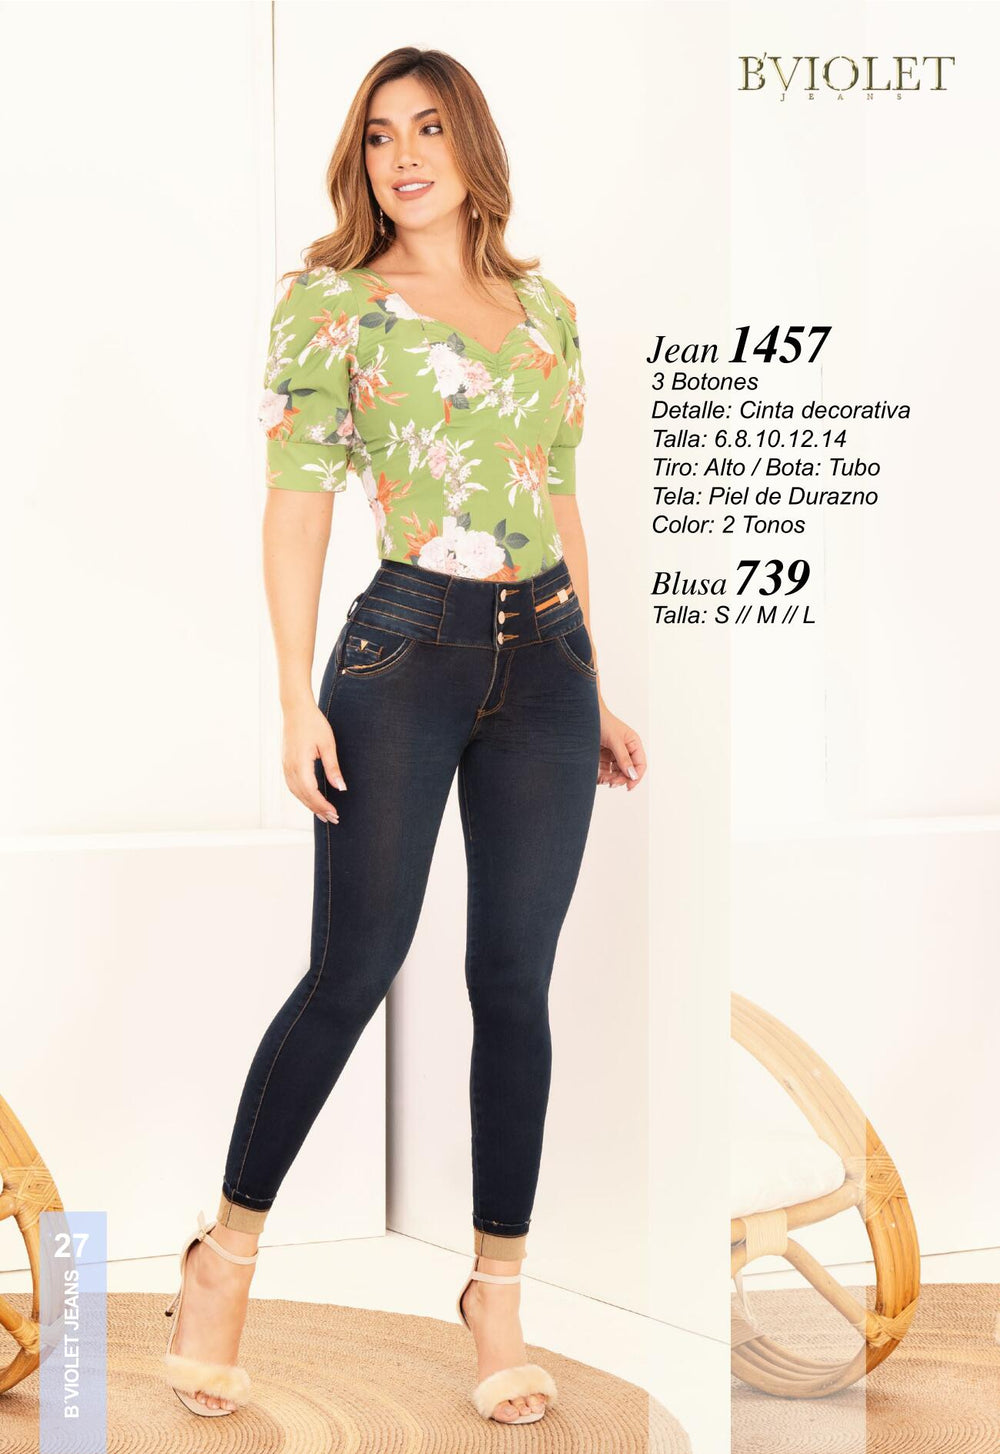 JeansCol Boutique - Jeans 💯% Colombianos 🇨🇴 😍 Diseño fresco para que te  sientas bella 👌🔥 Store #361 - Boynton Beach Mall 801 N. Congress Ave.  Boynton beach - Fl 33426 📲 WhatsApp (561)201-5782 #jeanscolombianos  #jeanslevantacola #modacolombiana